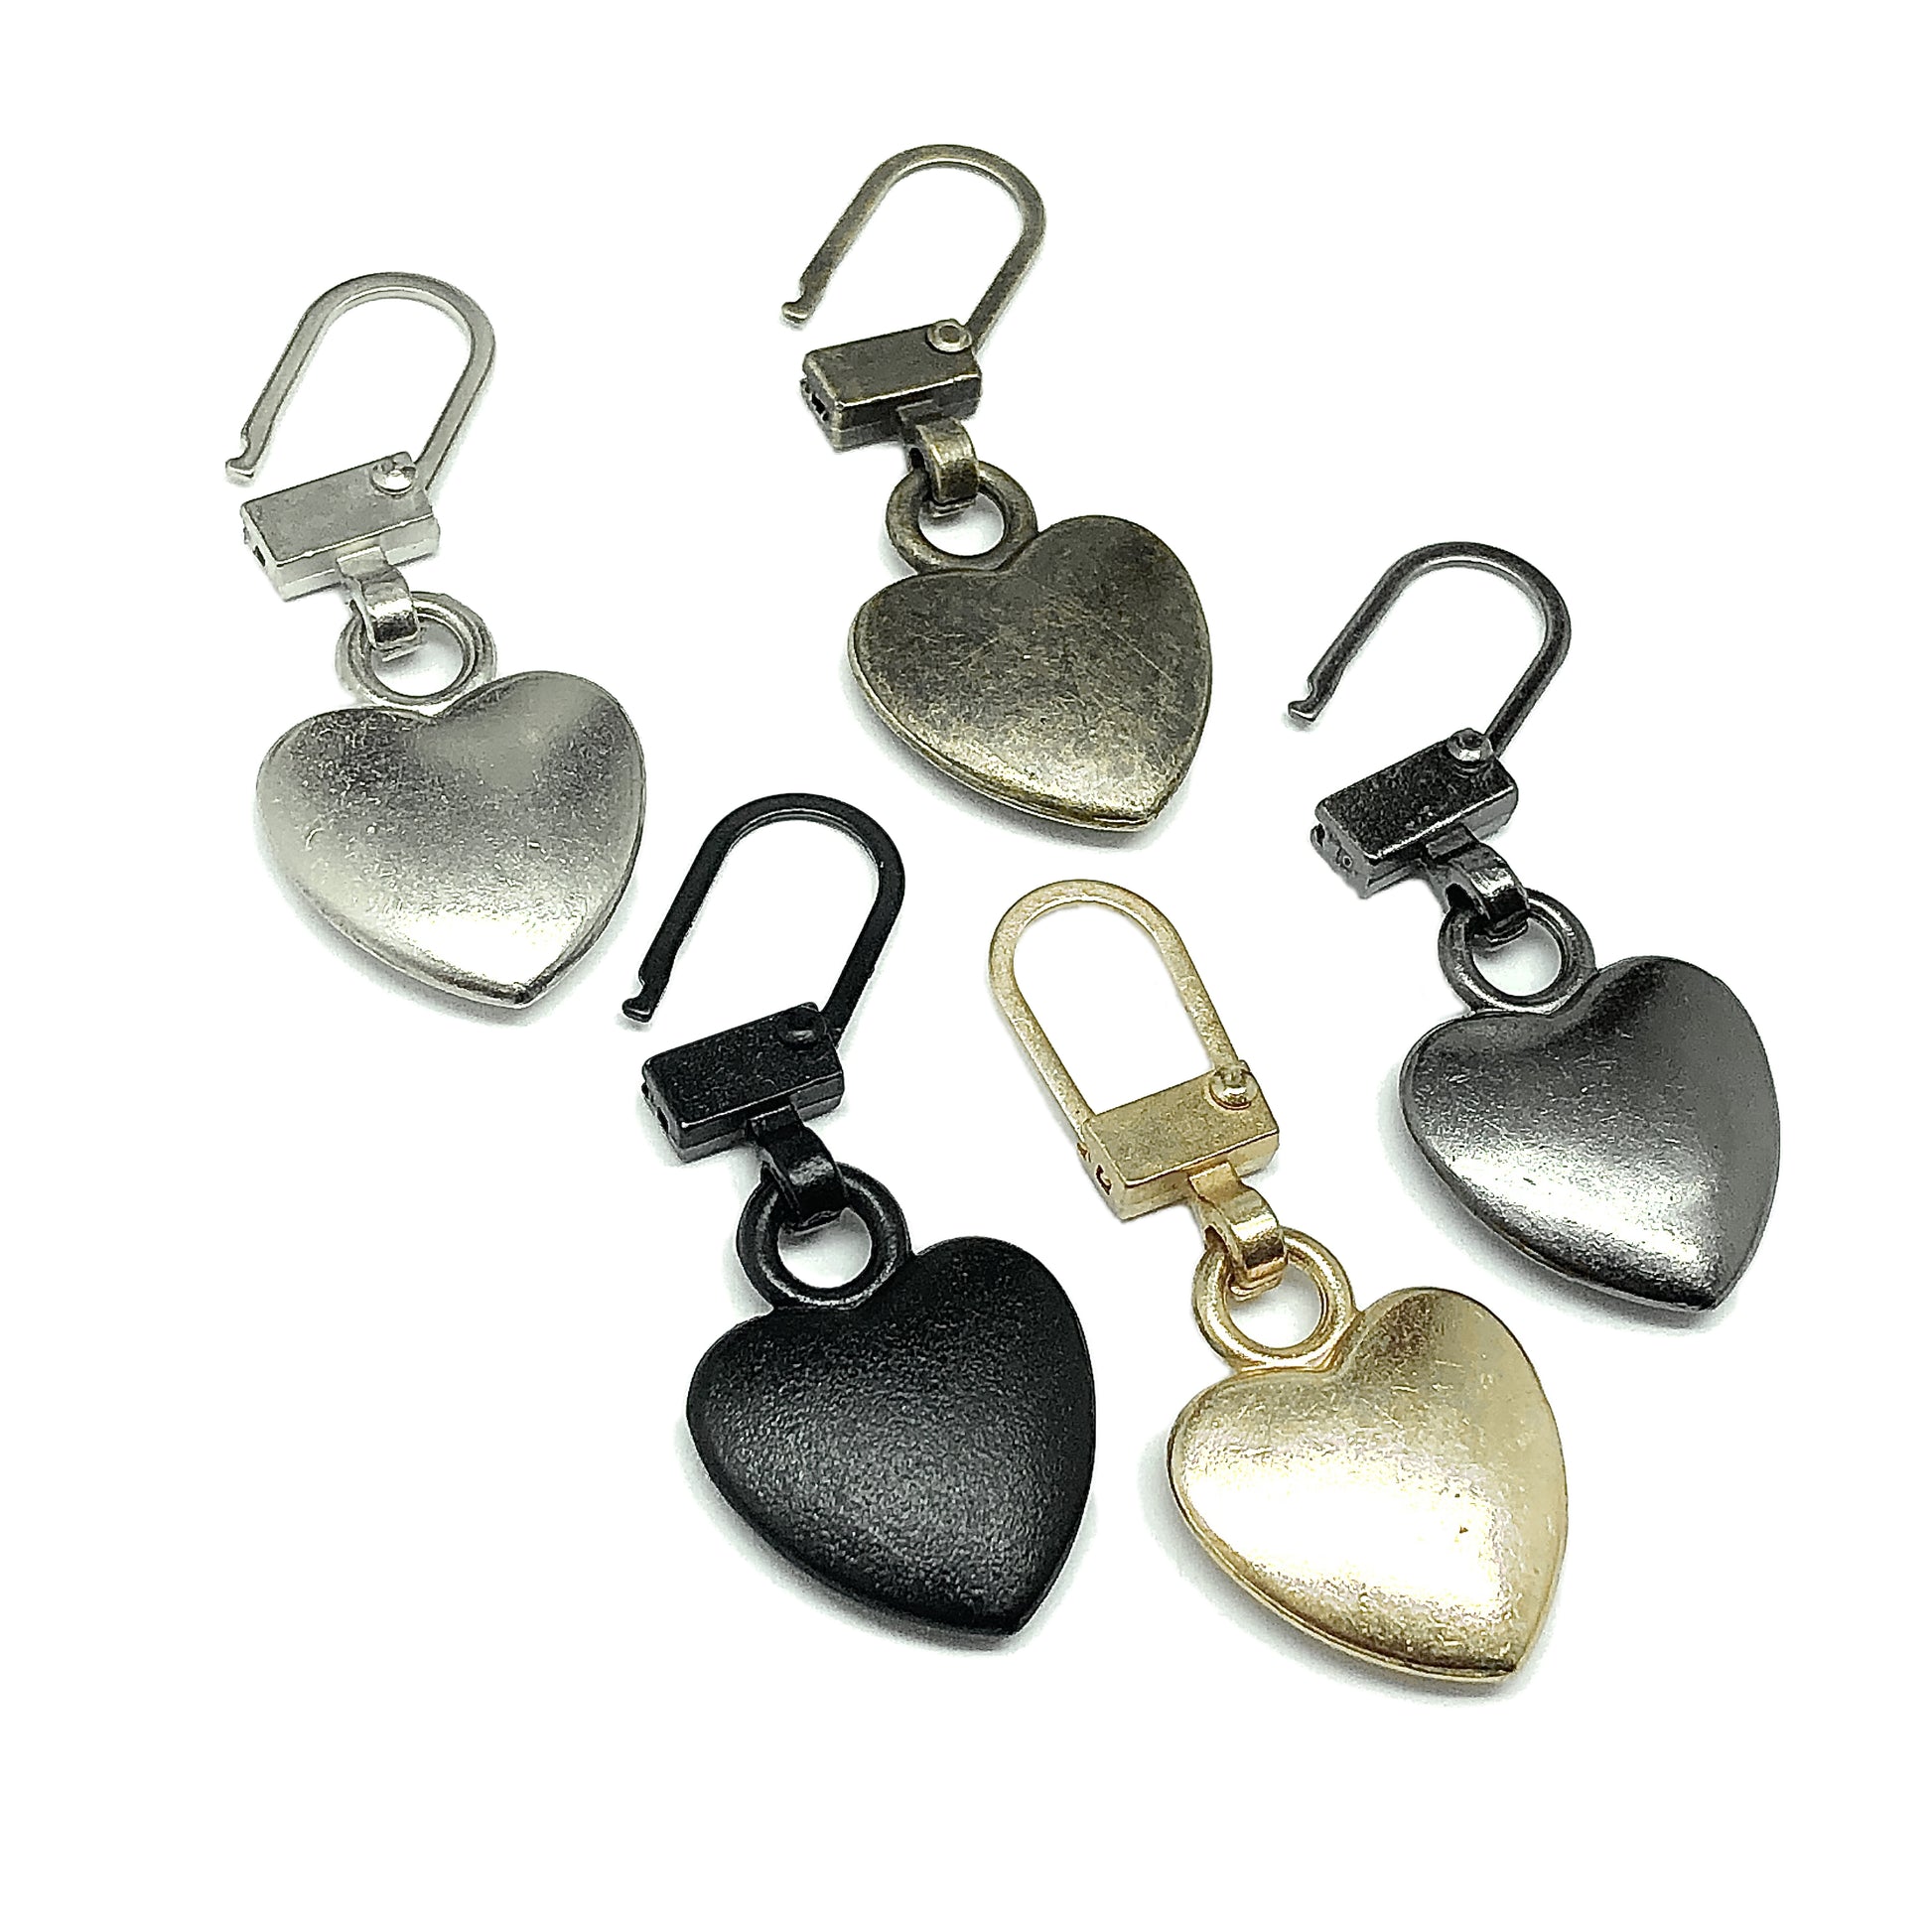 Blingschlingers - Any Zipper Repair Charm - Rustic Black Heart Zipper Pull Charm | Accessorize anything